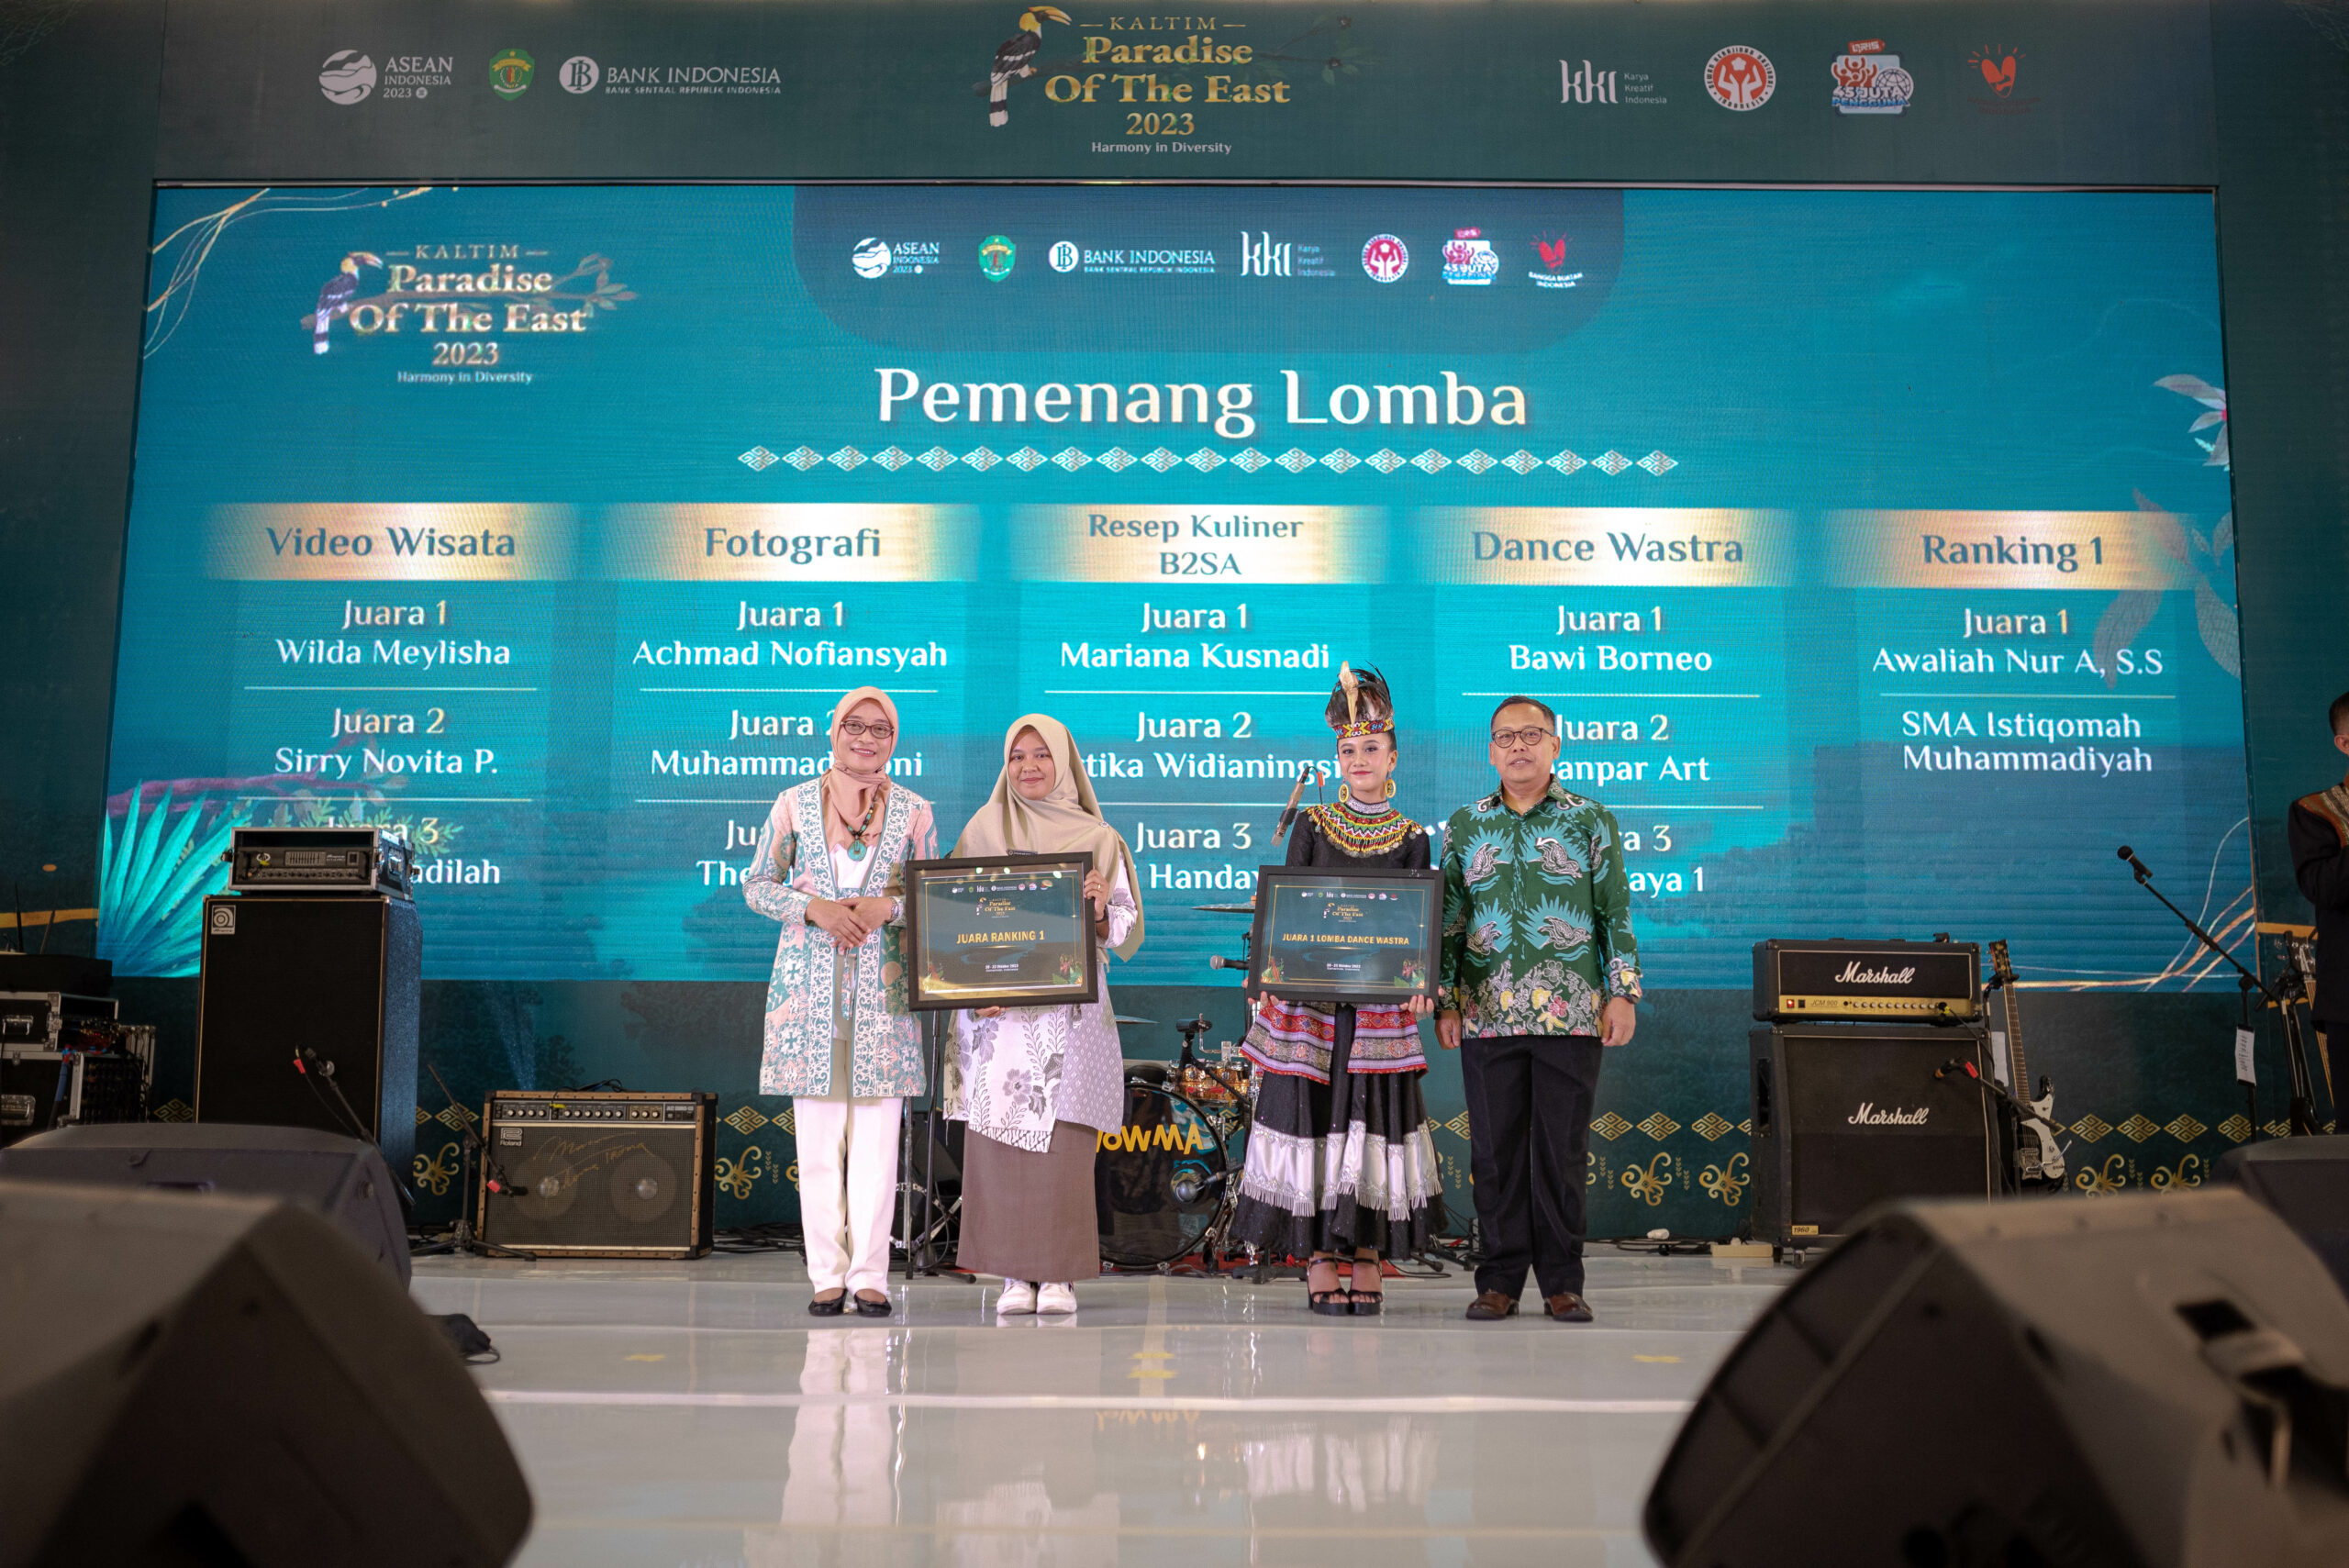 Ibu Sri Wahyuni Sekda Kalimantan Timur Memberi Penghargaan Kepada Guru Pemenang Lomba Rangking 1 Bank Indonesia